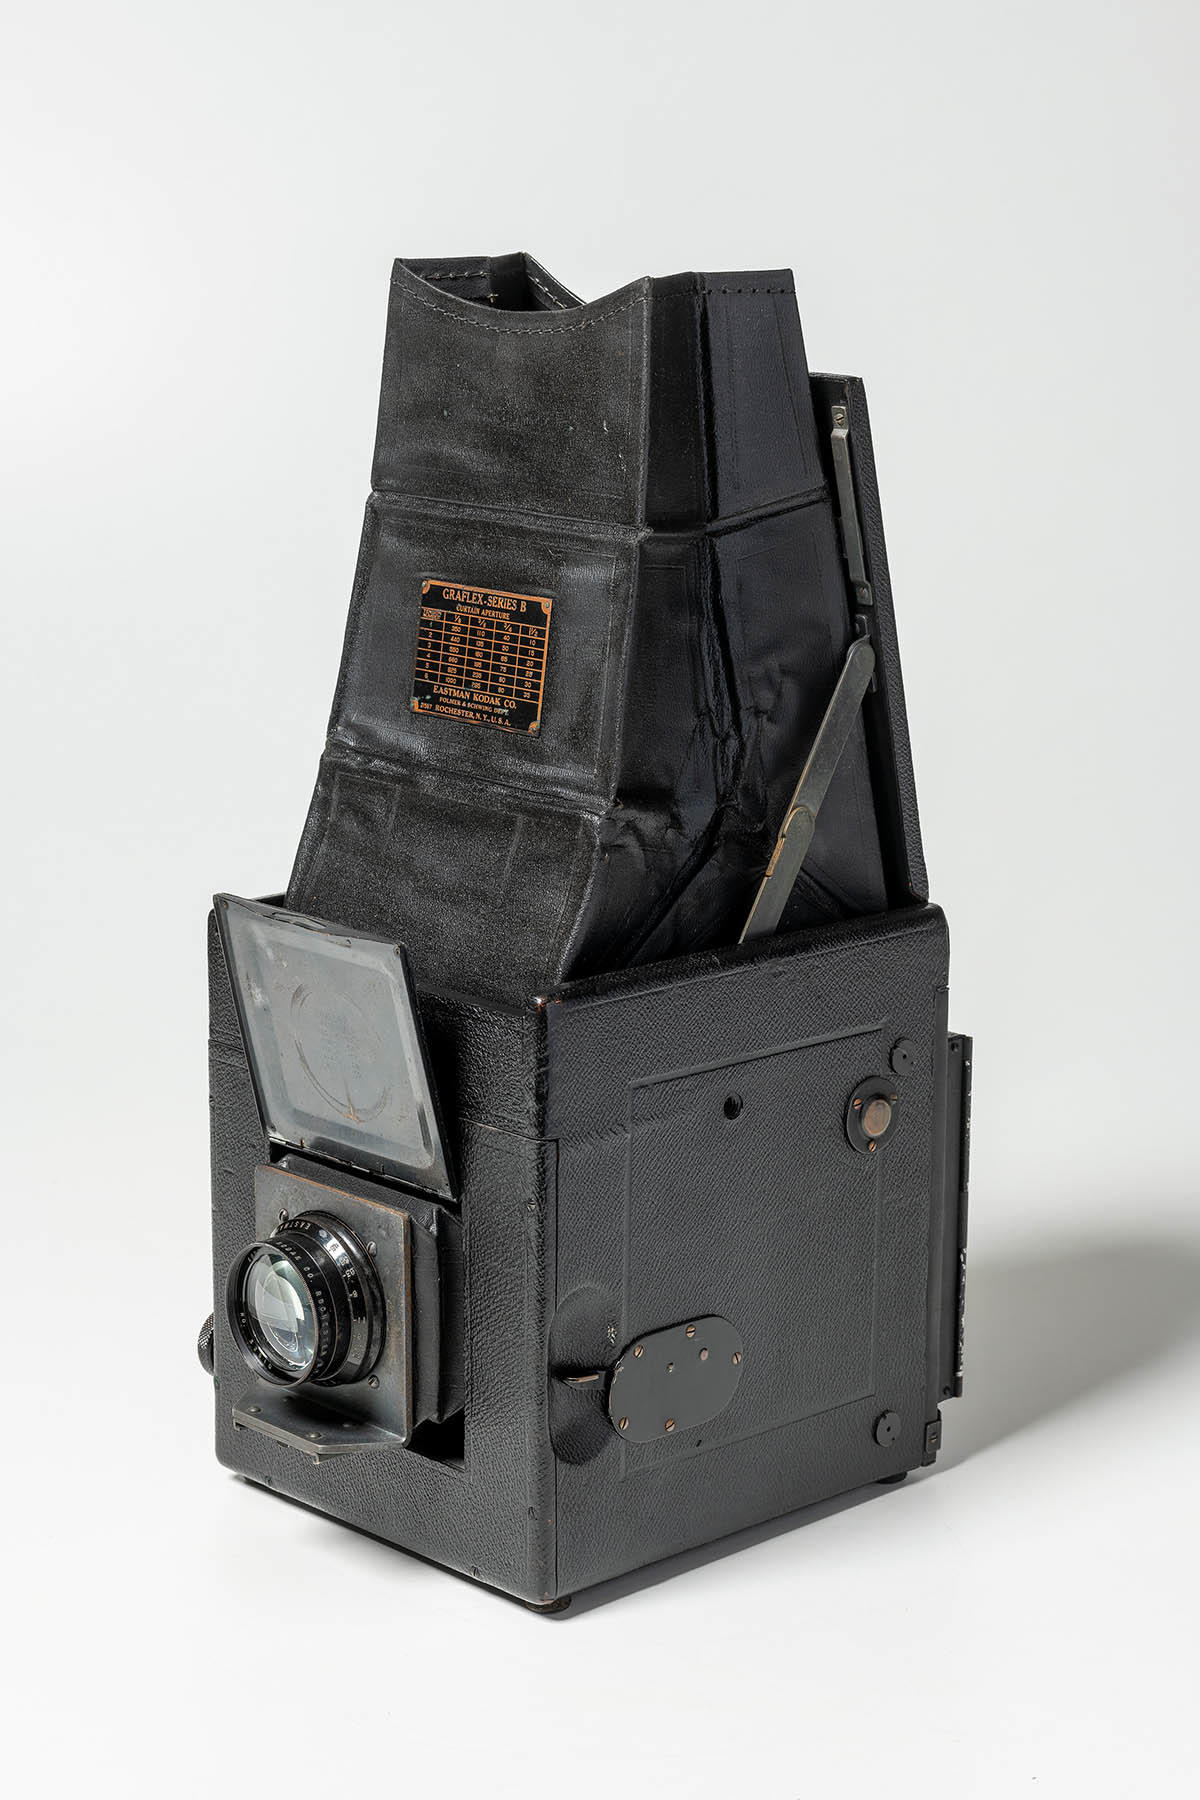 An old Graflex series B camera used by Margaret Watkins